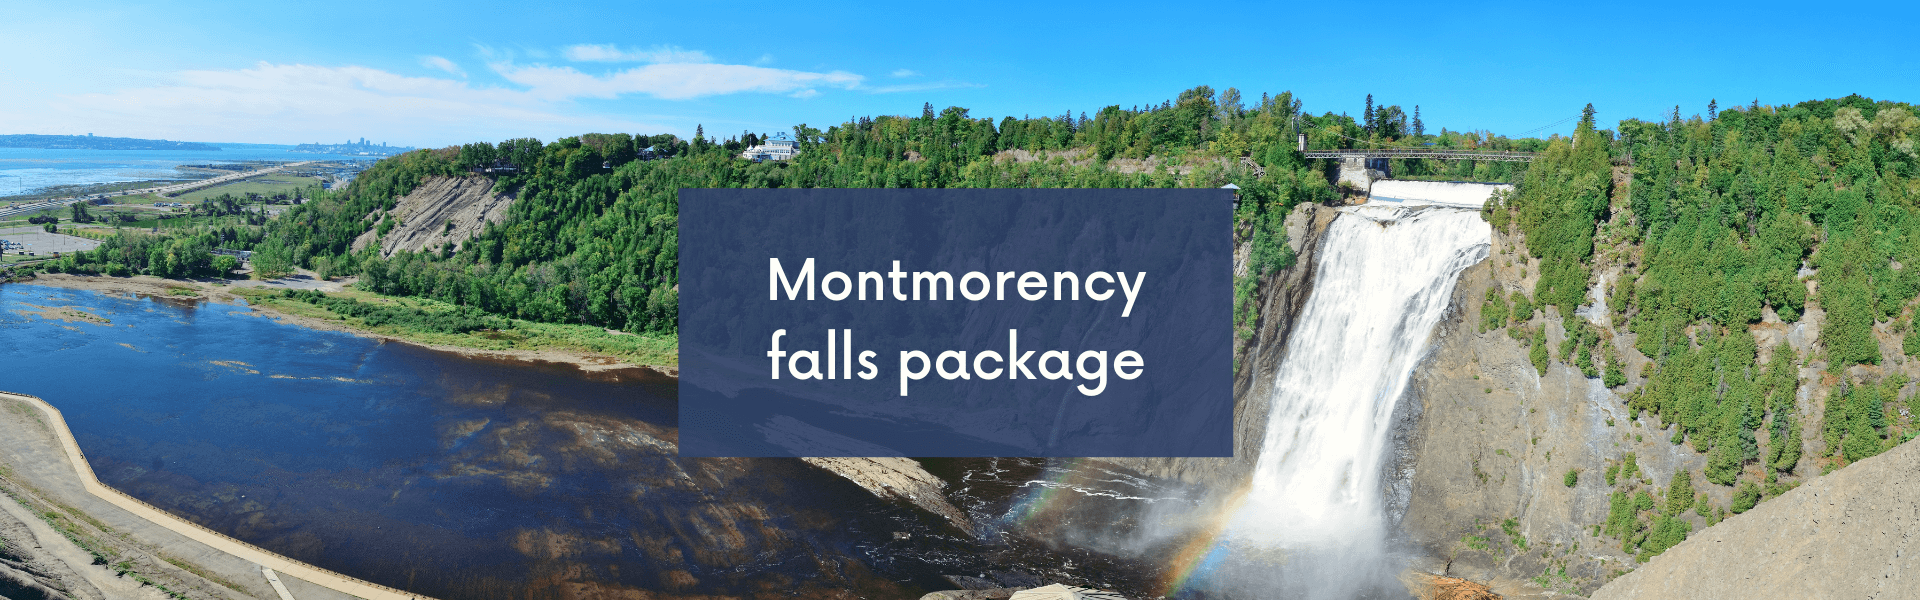 Montmorency falls